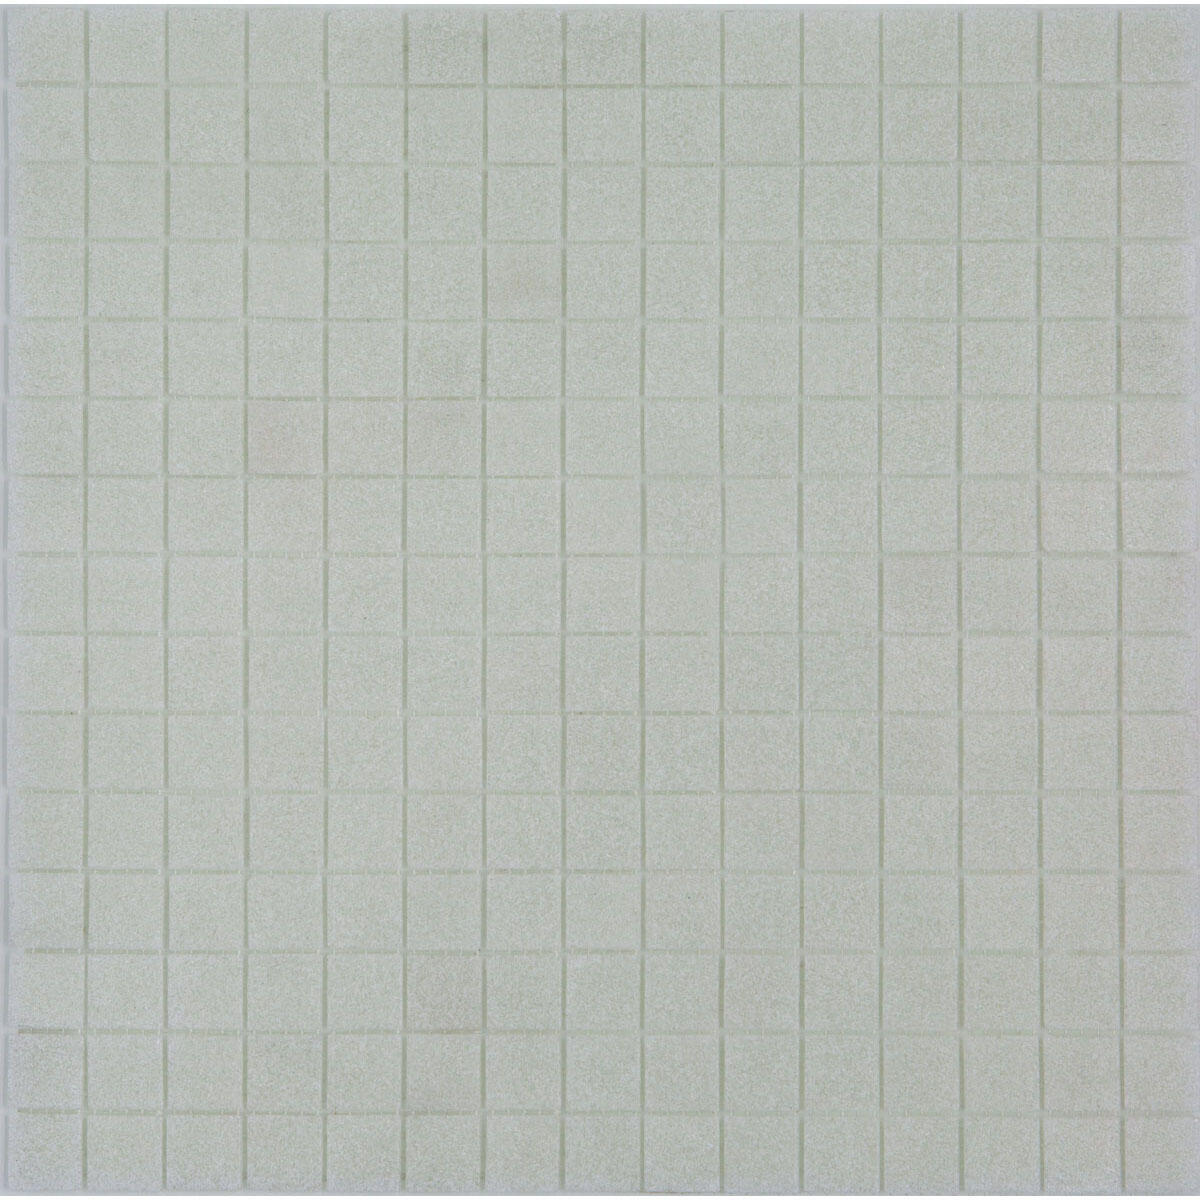 Mosaico H 0.4 x L 31.6 cm bianco - 2